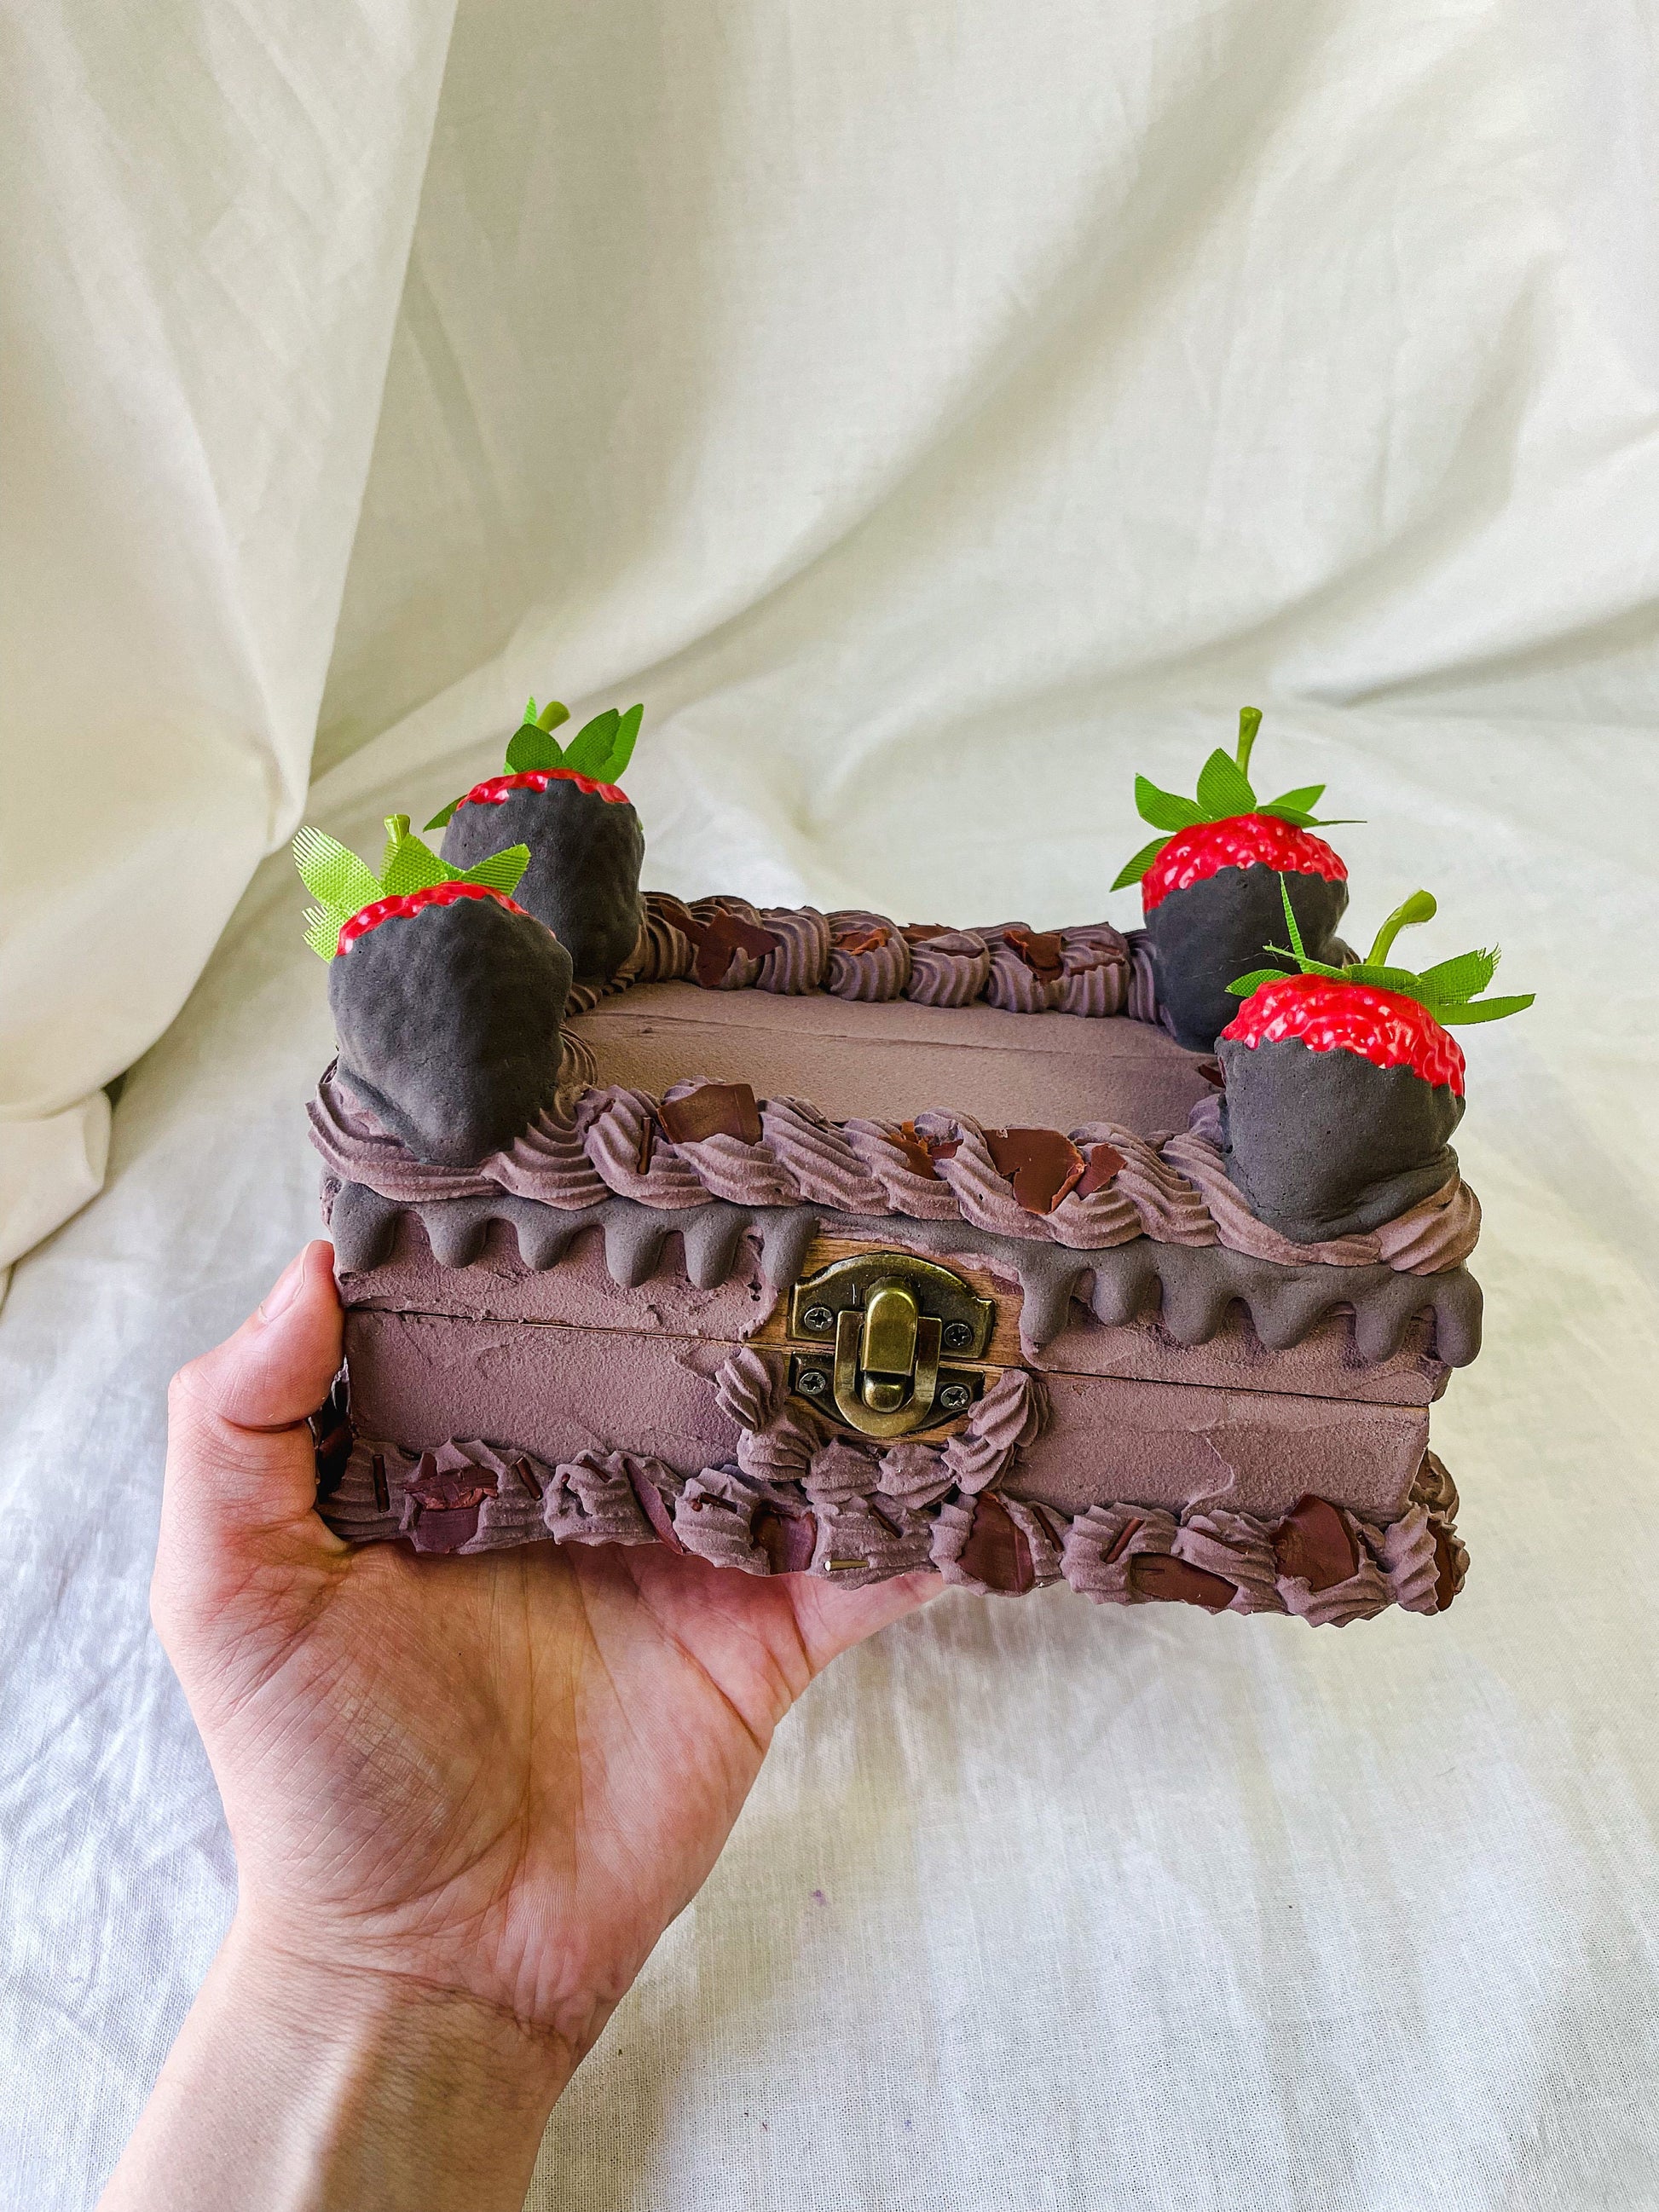 Chocolate Fake Cake Boxes